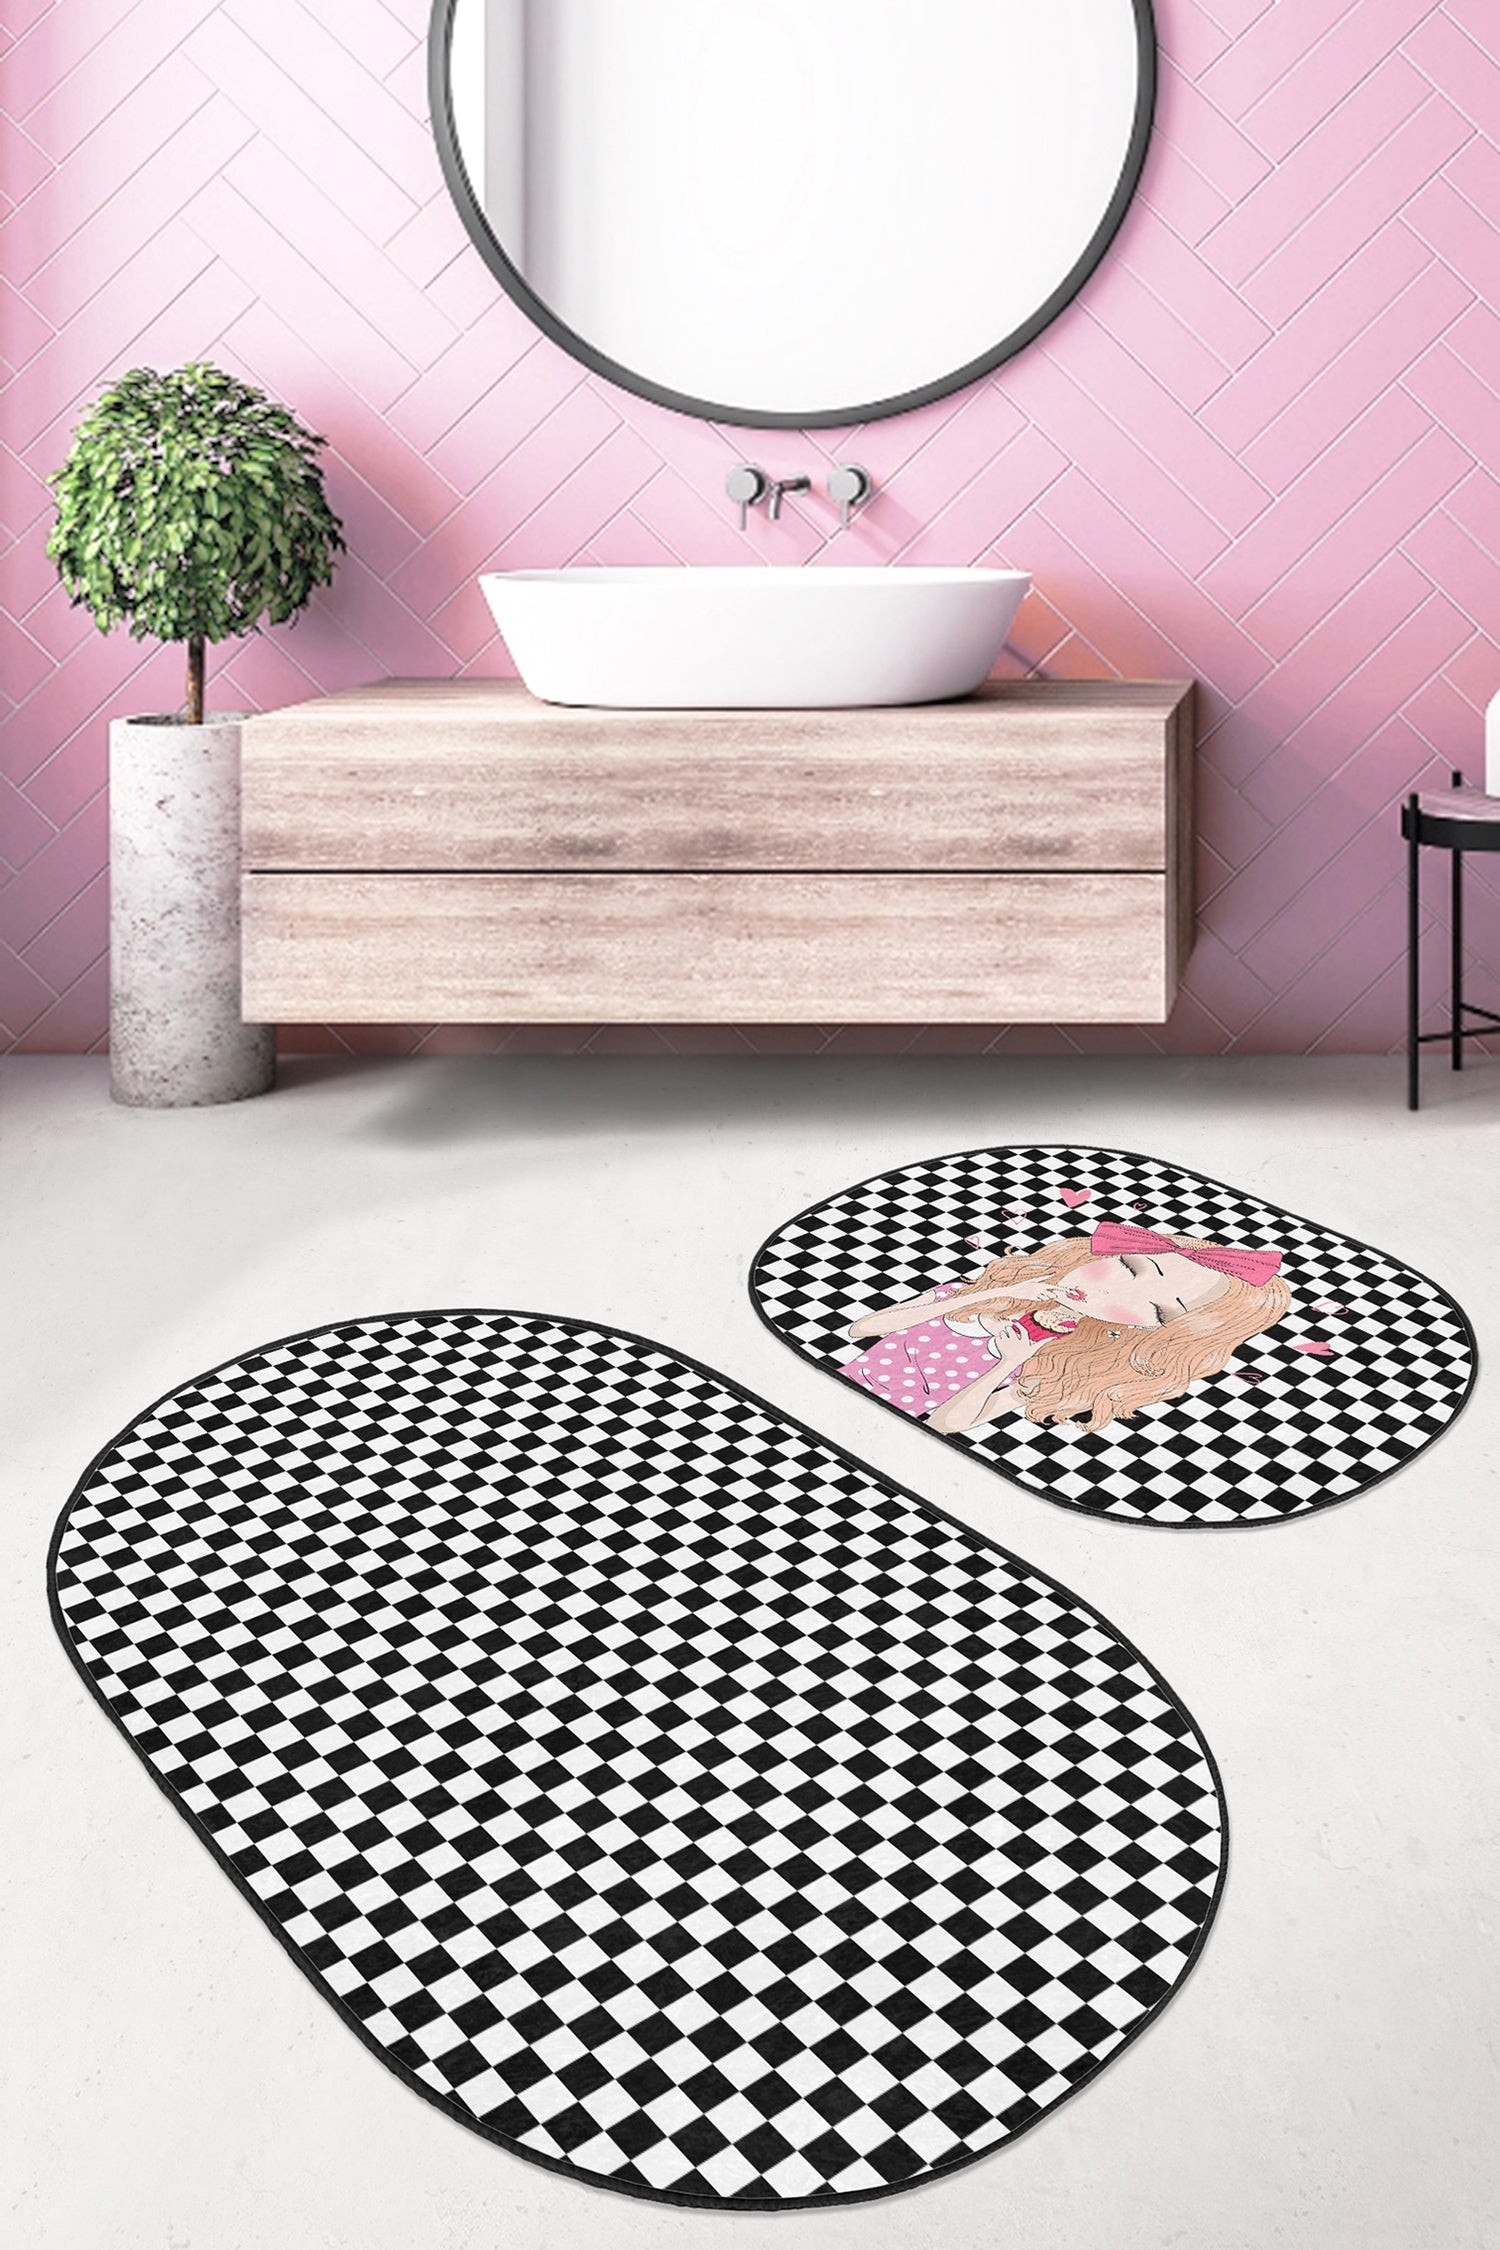 Girls' Bathroom Décor: Checkered Pattern Bath Mats